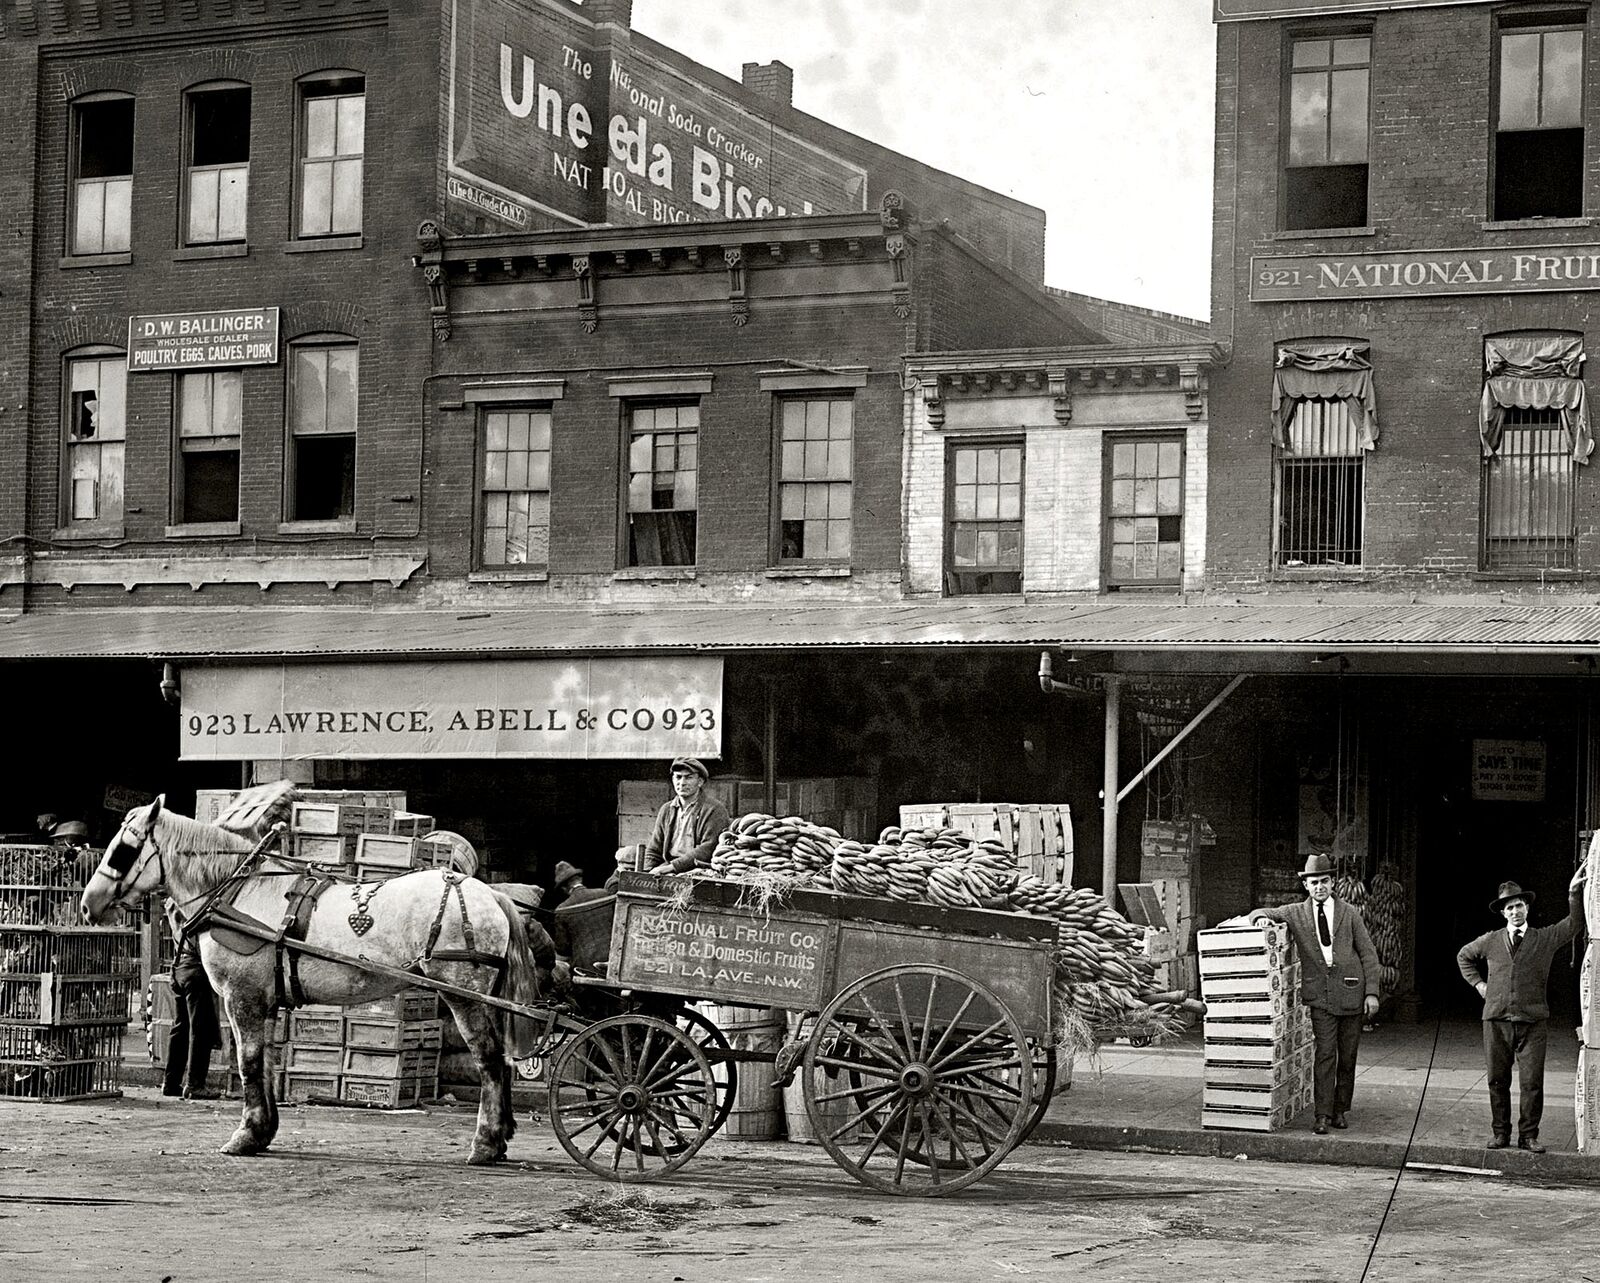 1921 National Fruit Co WASHINGTON DC Horse Drawn Cart Street Scene Photo 175-Z)